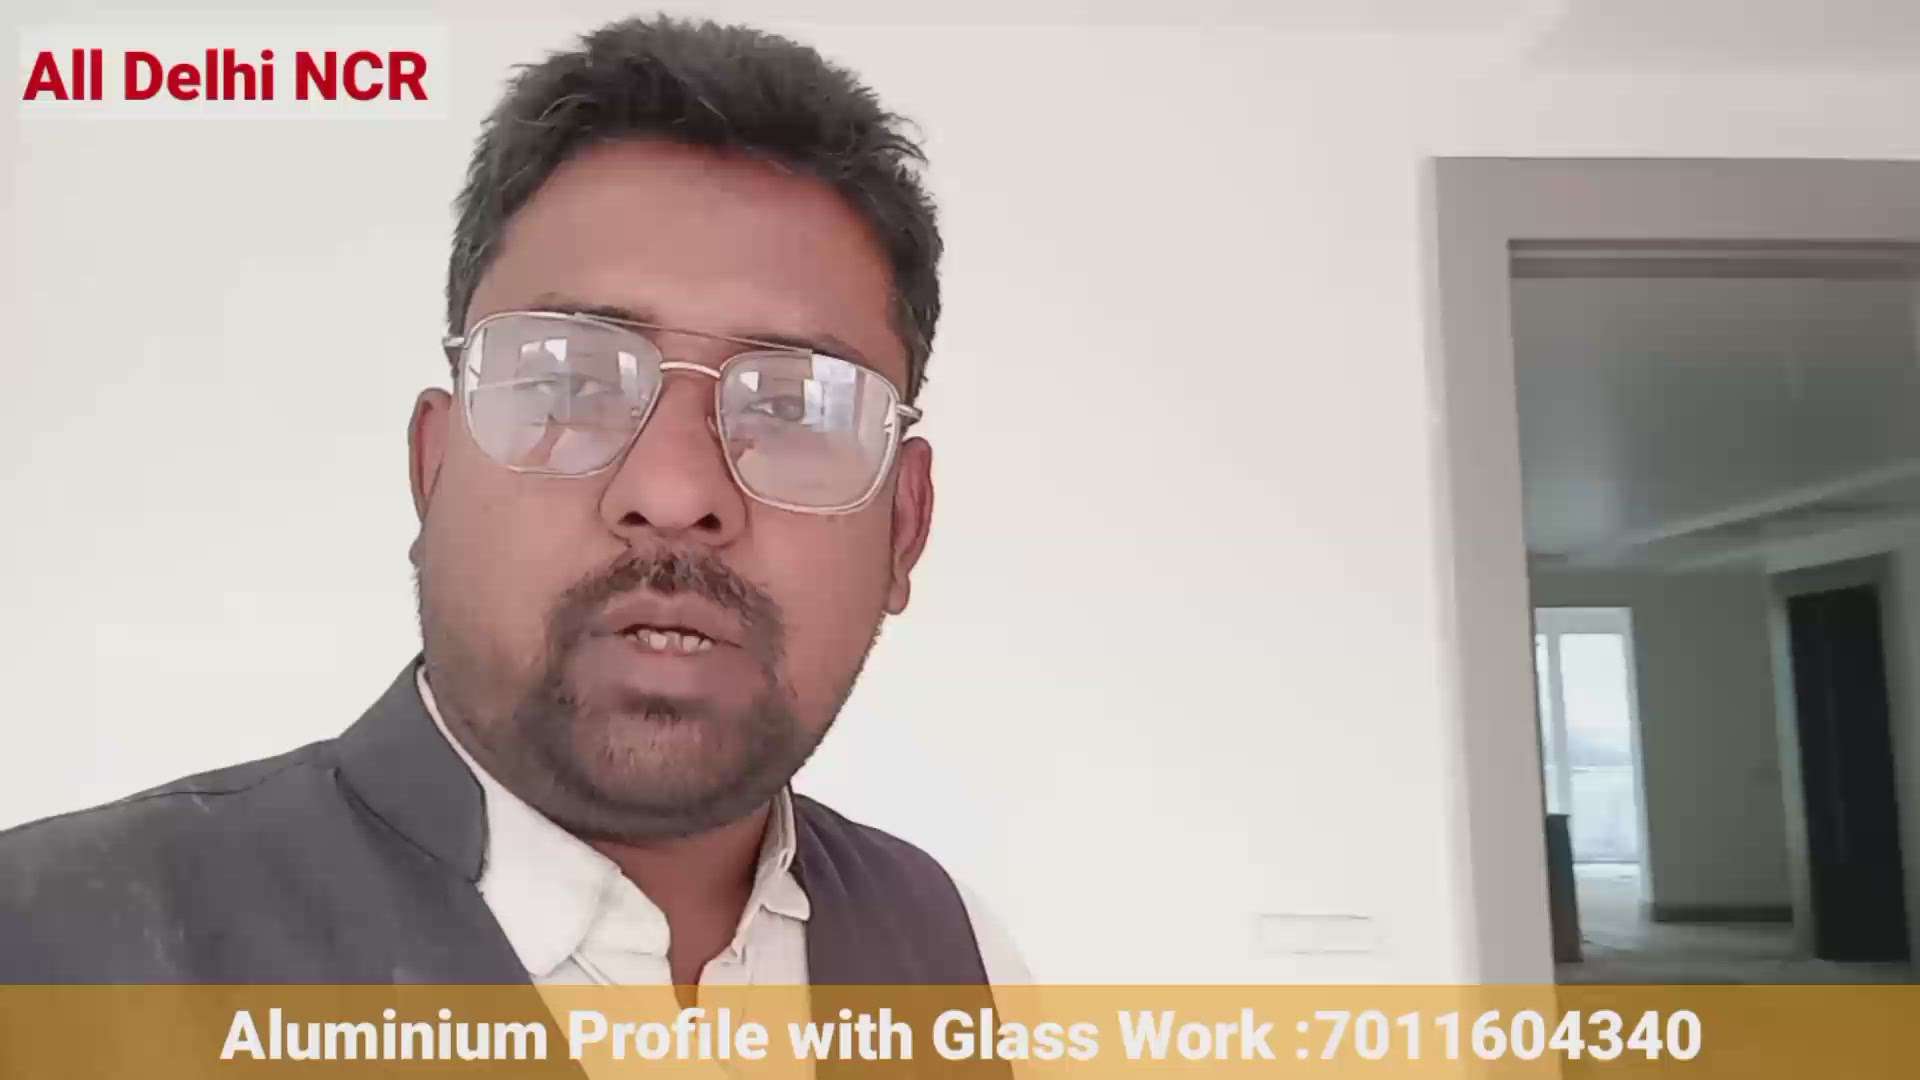 #aluminium Profile #Shower partition #glass Work all #DelhiNCR service available: 7011604340